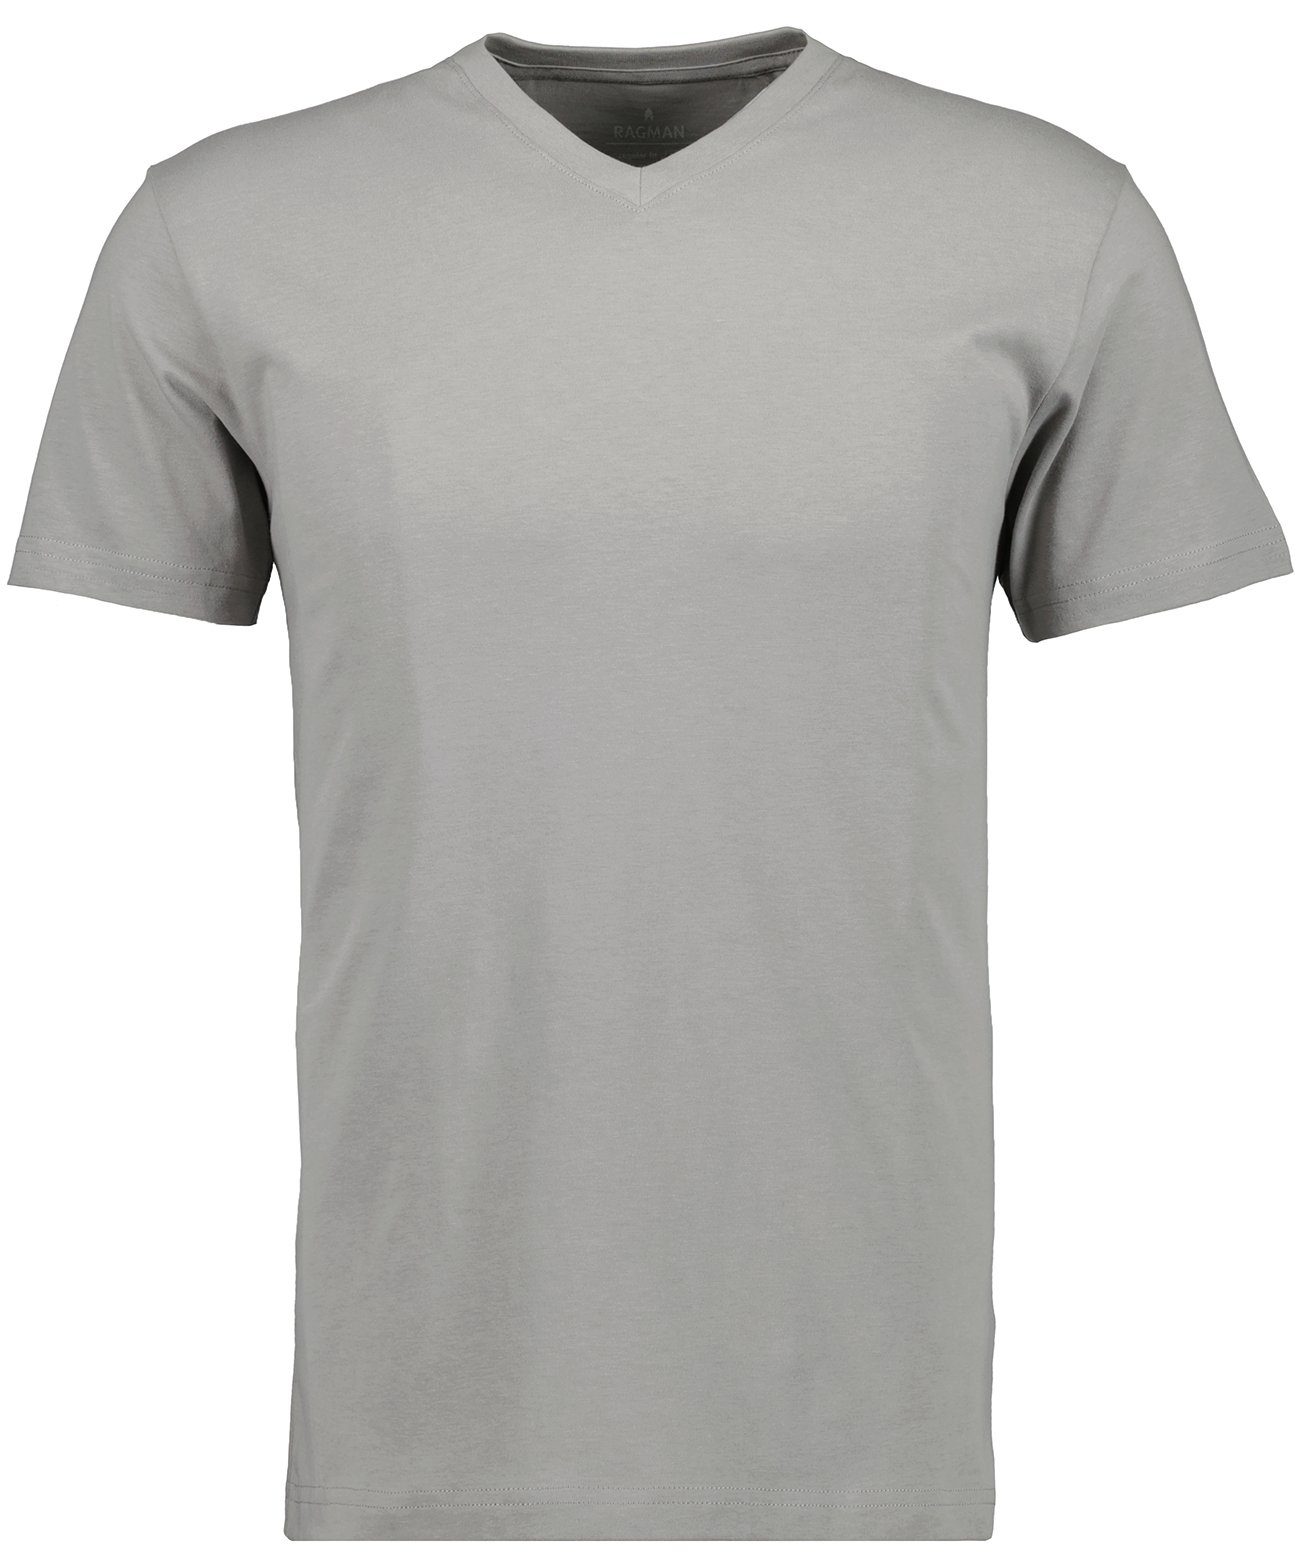 RAGMAN T-Shirt Grau-Beige-215